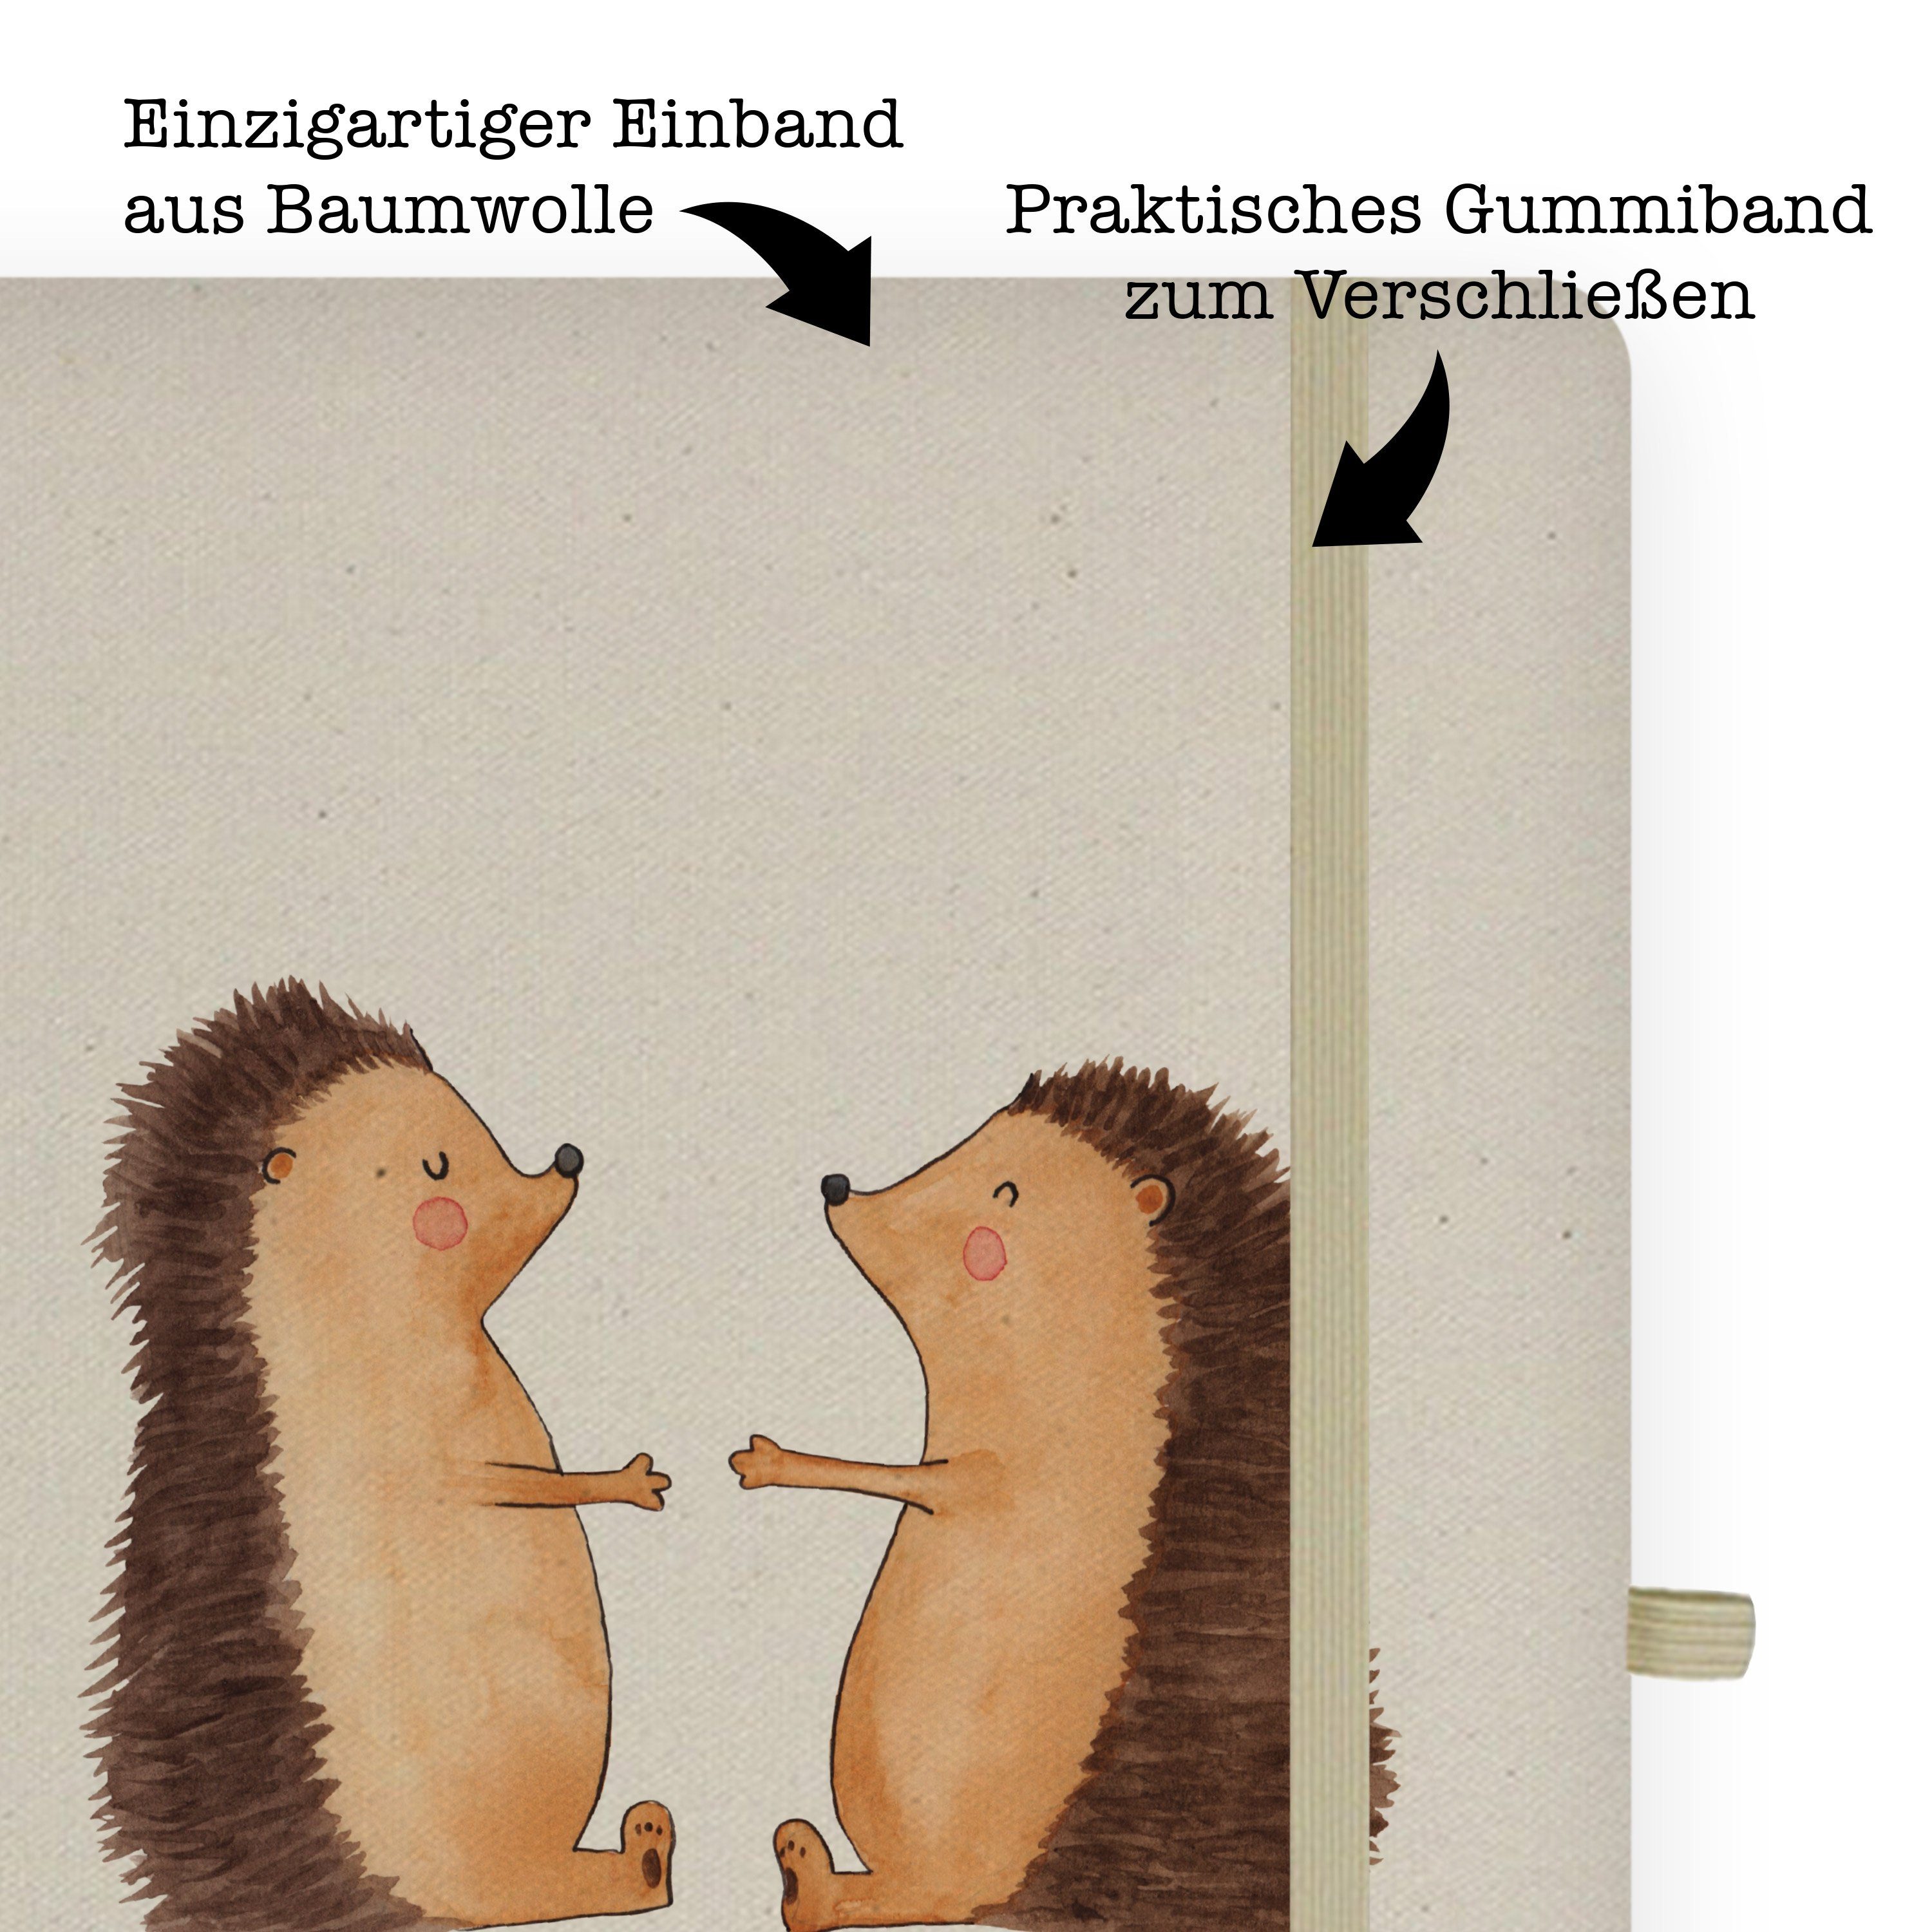 Mrs. Notizen, Transparent Mr. & Skizzenbuch, Igel & Mr. Panda Notizbuch Geschenk, - Panda Journal, Mrs. - P Liebe